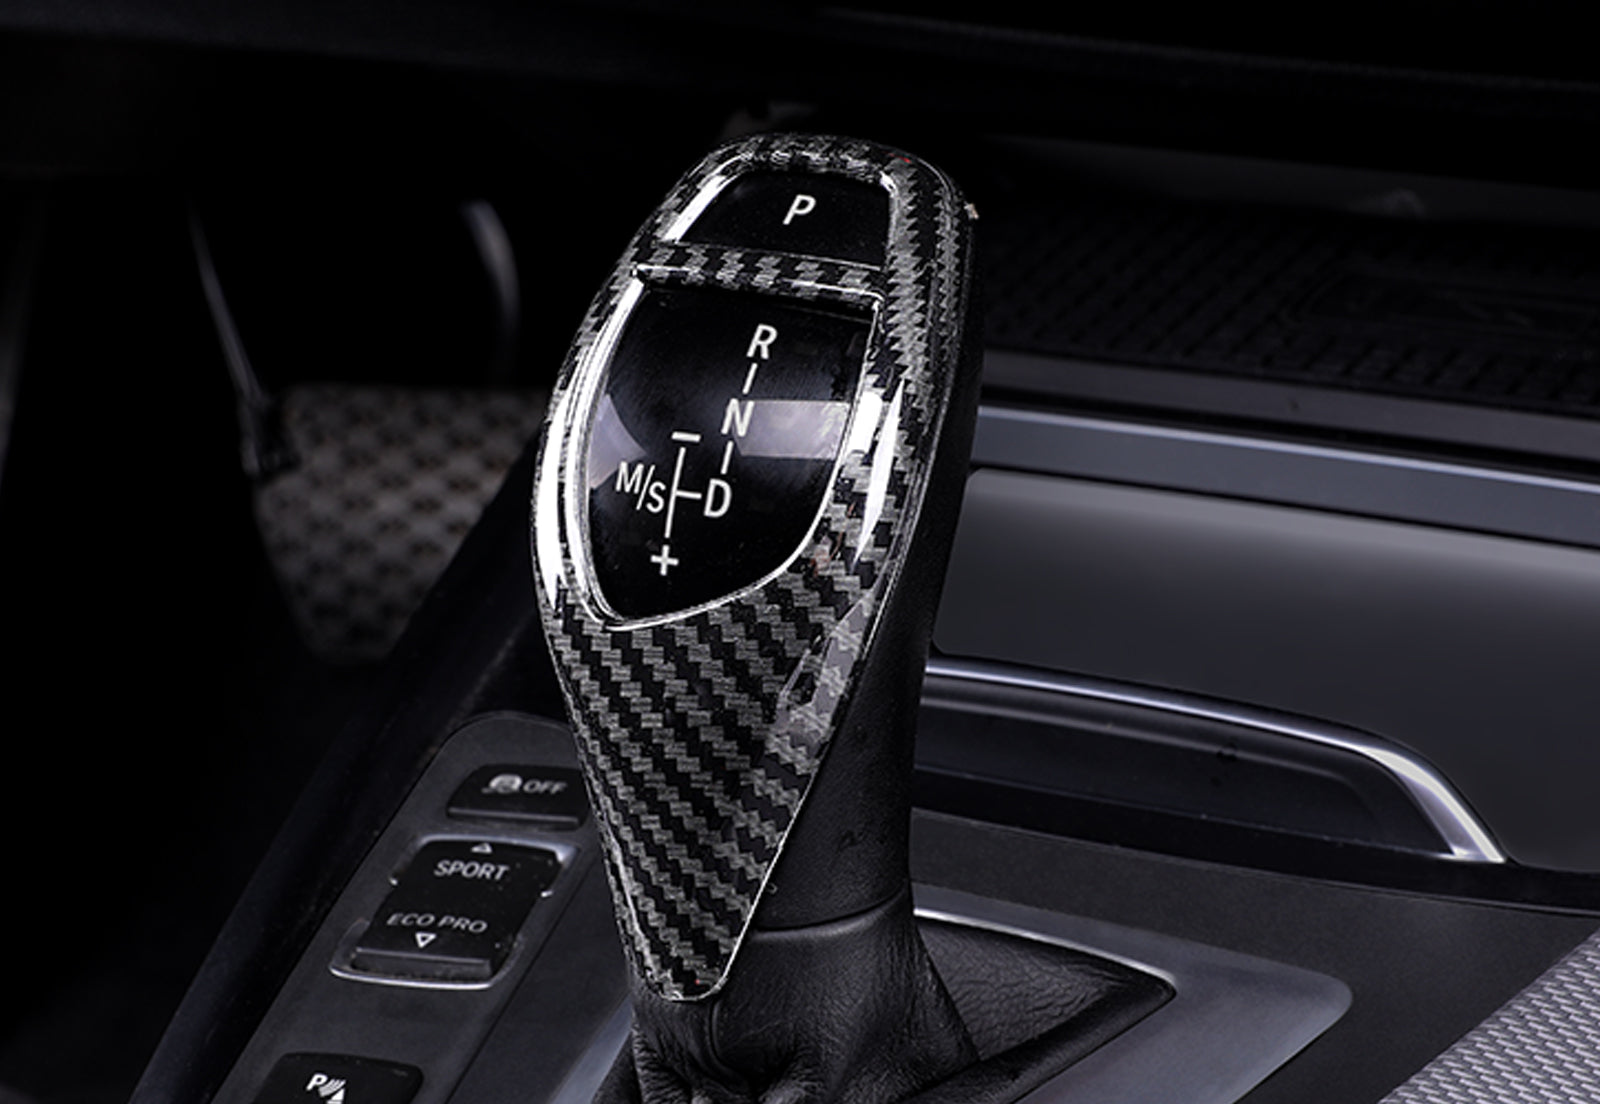 Carbon Fiber Pattern Gear Shift Knob Cover Trim for BMW F20 F21